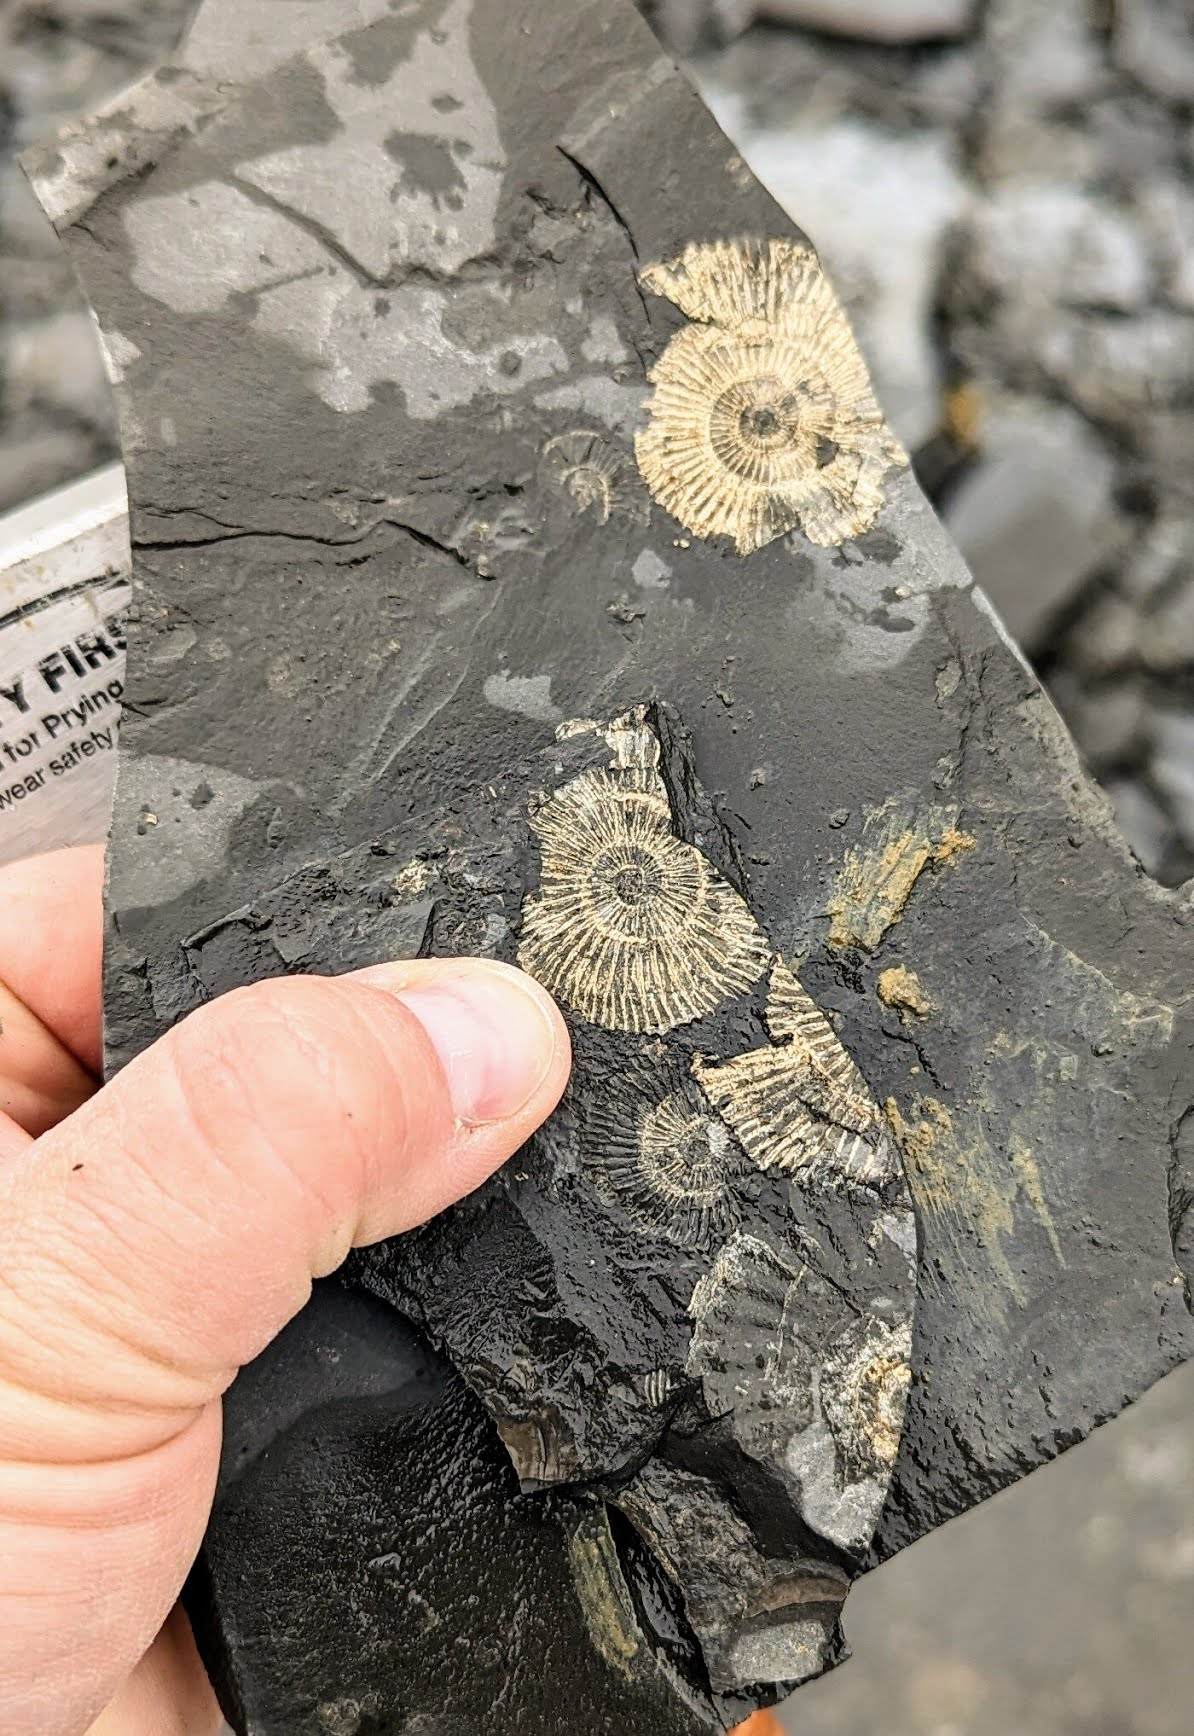 Gyldne ammonitfossiler ved Ohmden stenbrud.